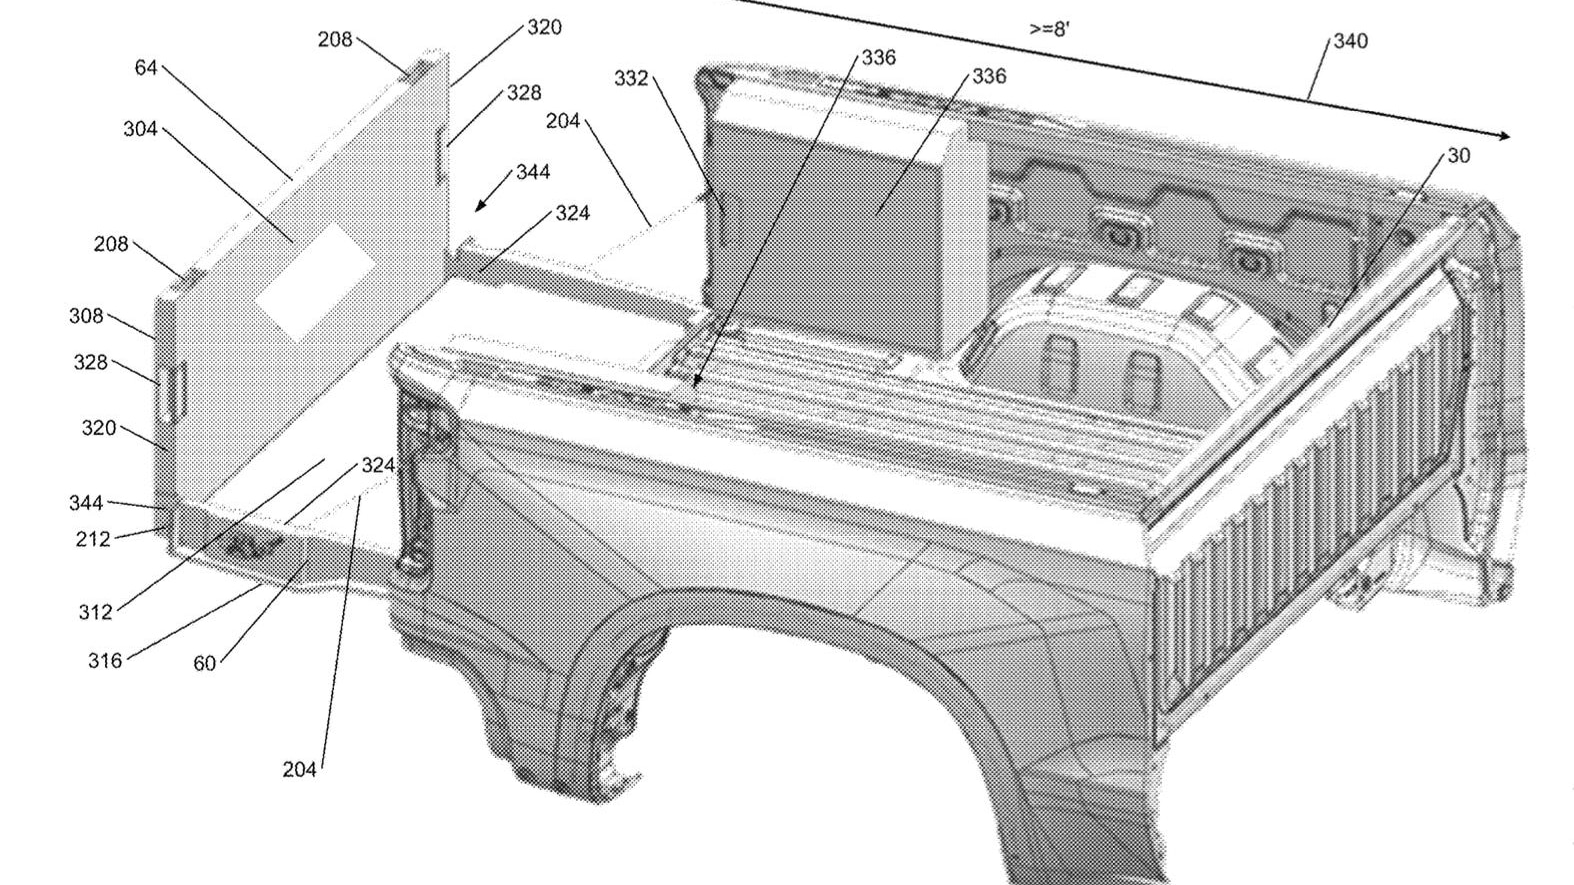 General Motors extendable cargo box patent image